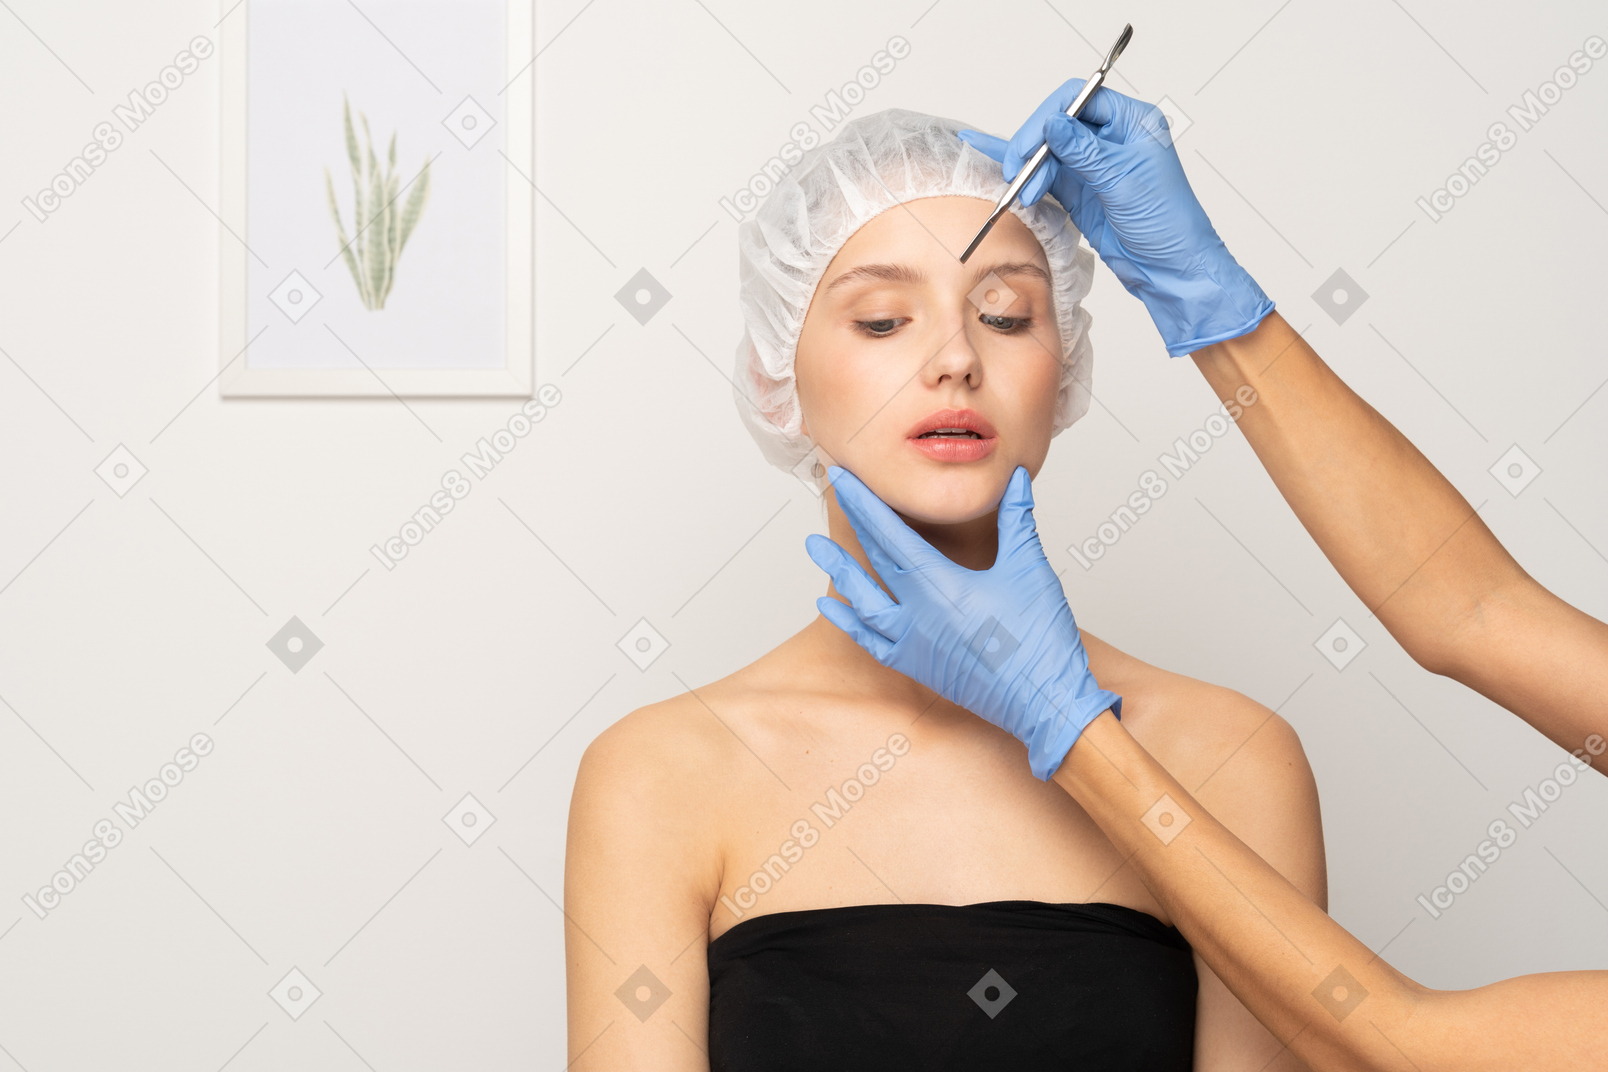 Plastic surgeon holding scalpel near woman's face